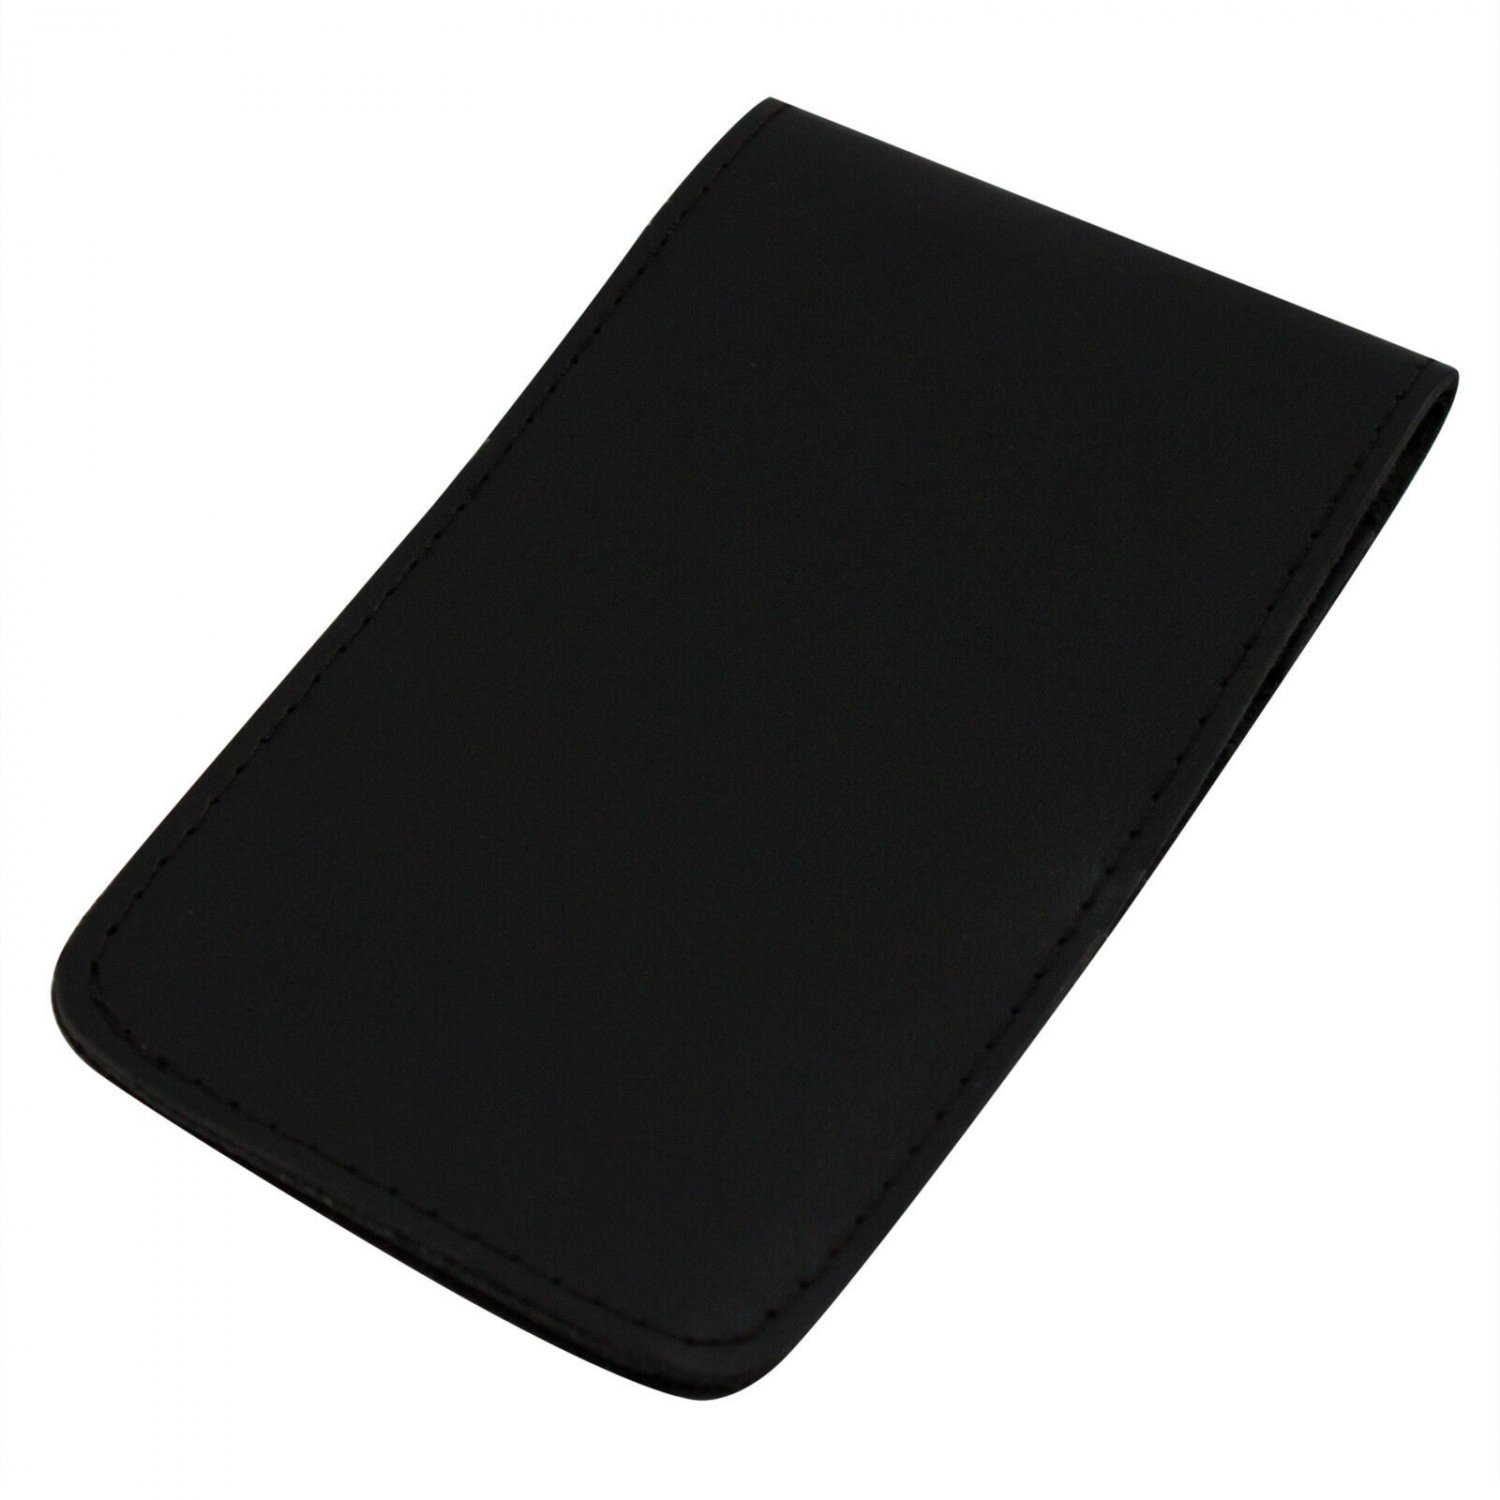 ASR Federal Leather 3x5 Standard Memo Book Cover - Plain Black